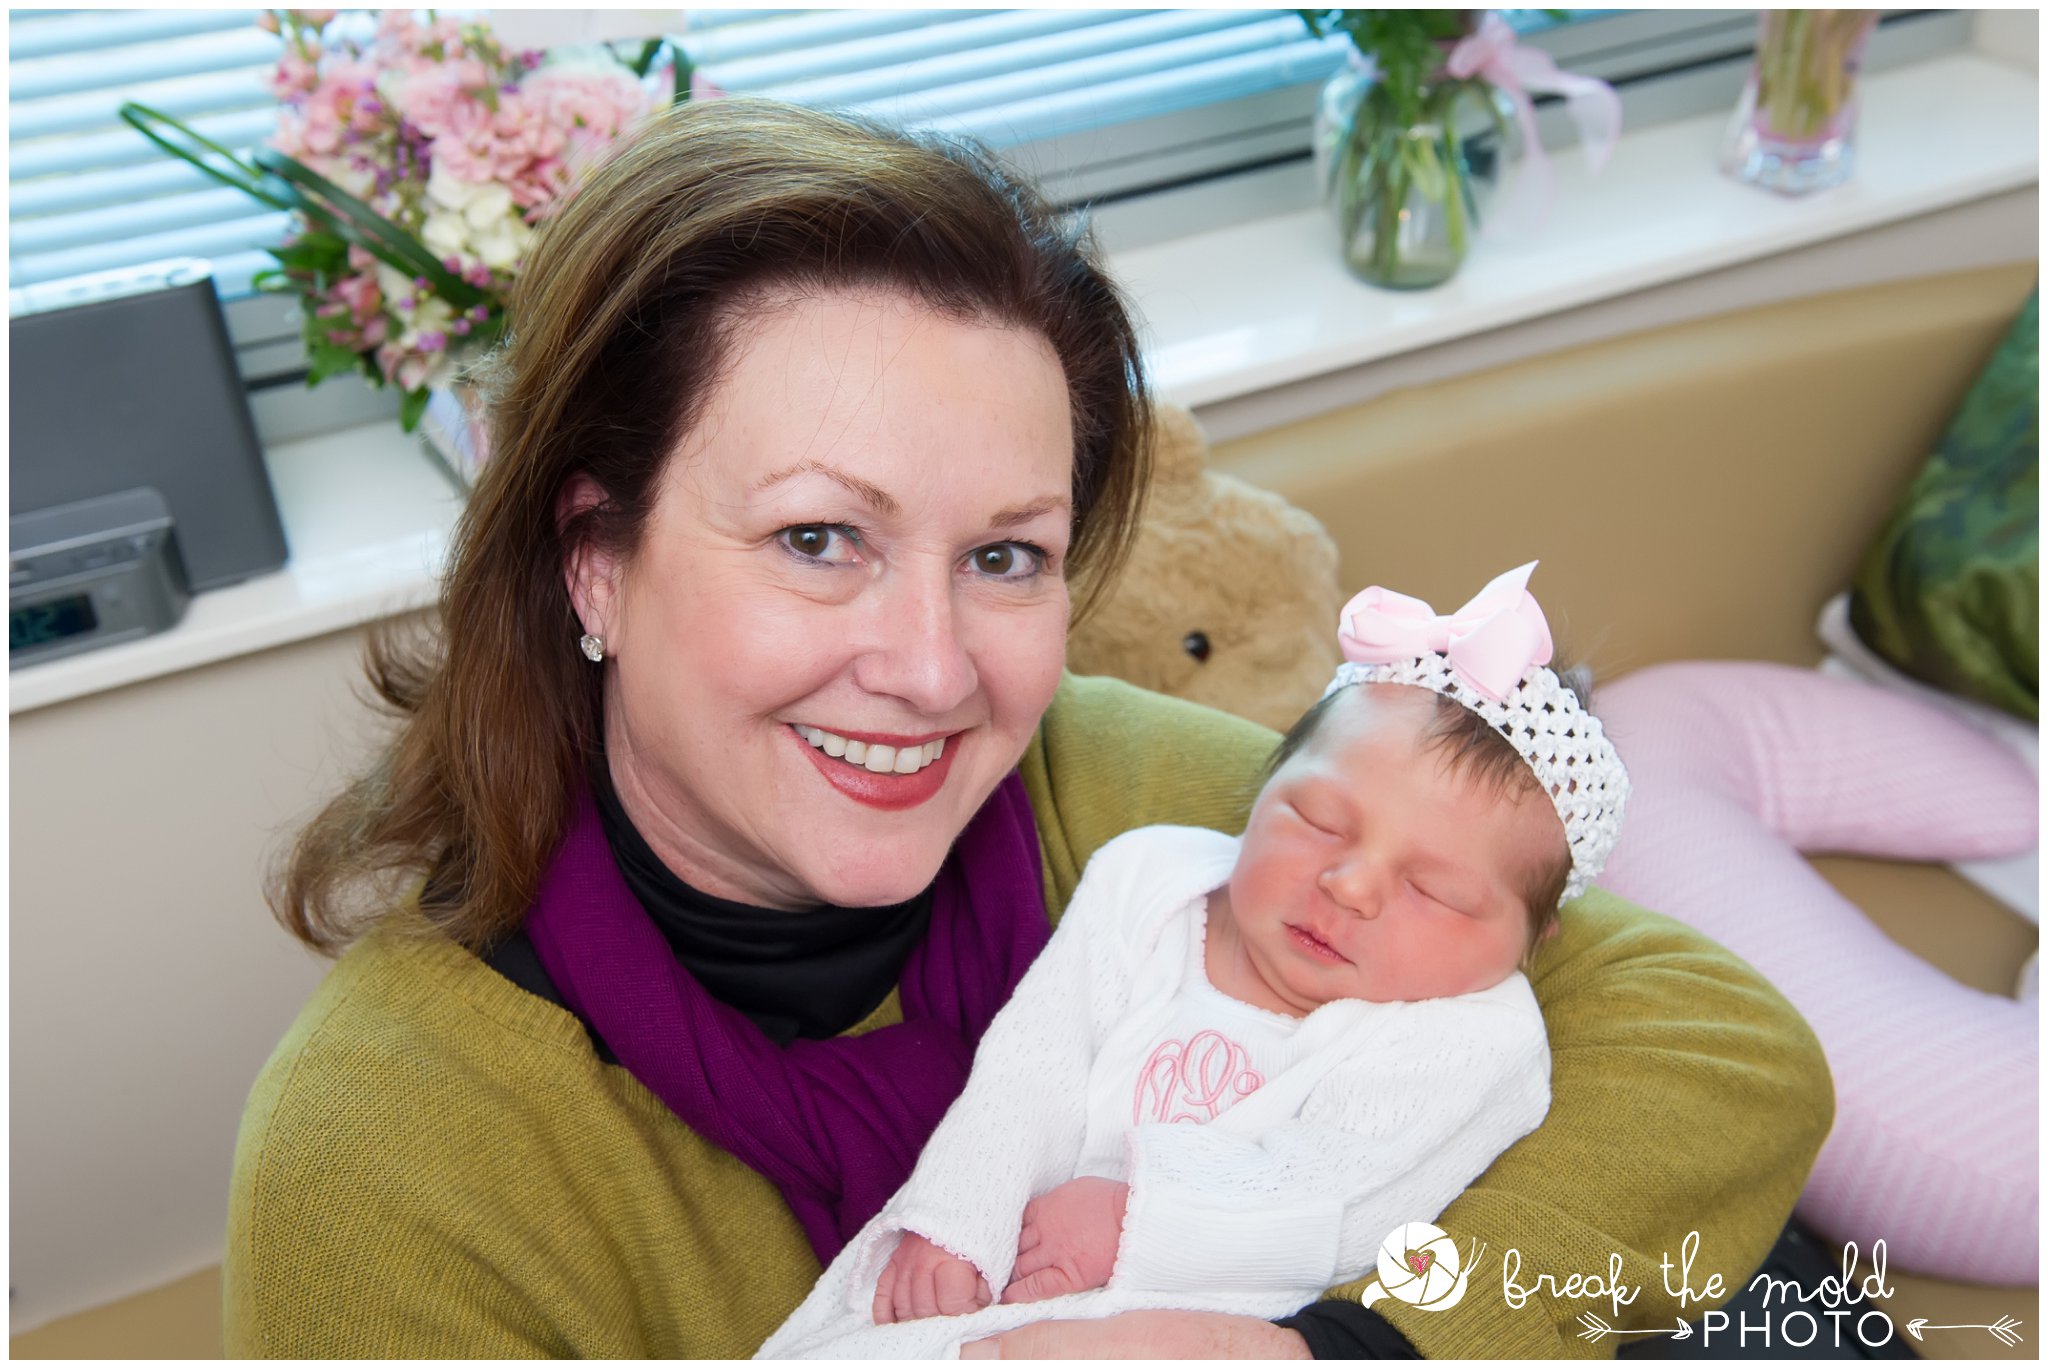 fresh-24-newborn-in-hospital-break-the-mold-photo-baby-girl-sweet-in-room-photos (38).jpg